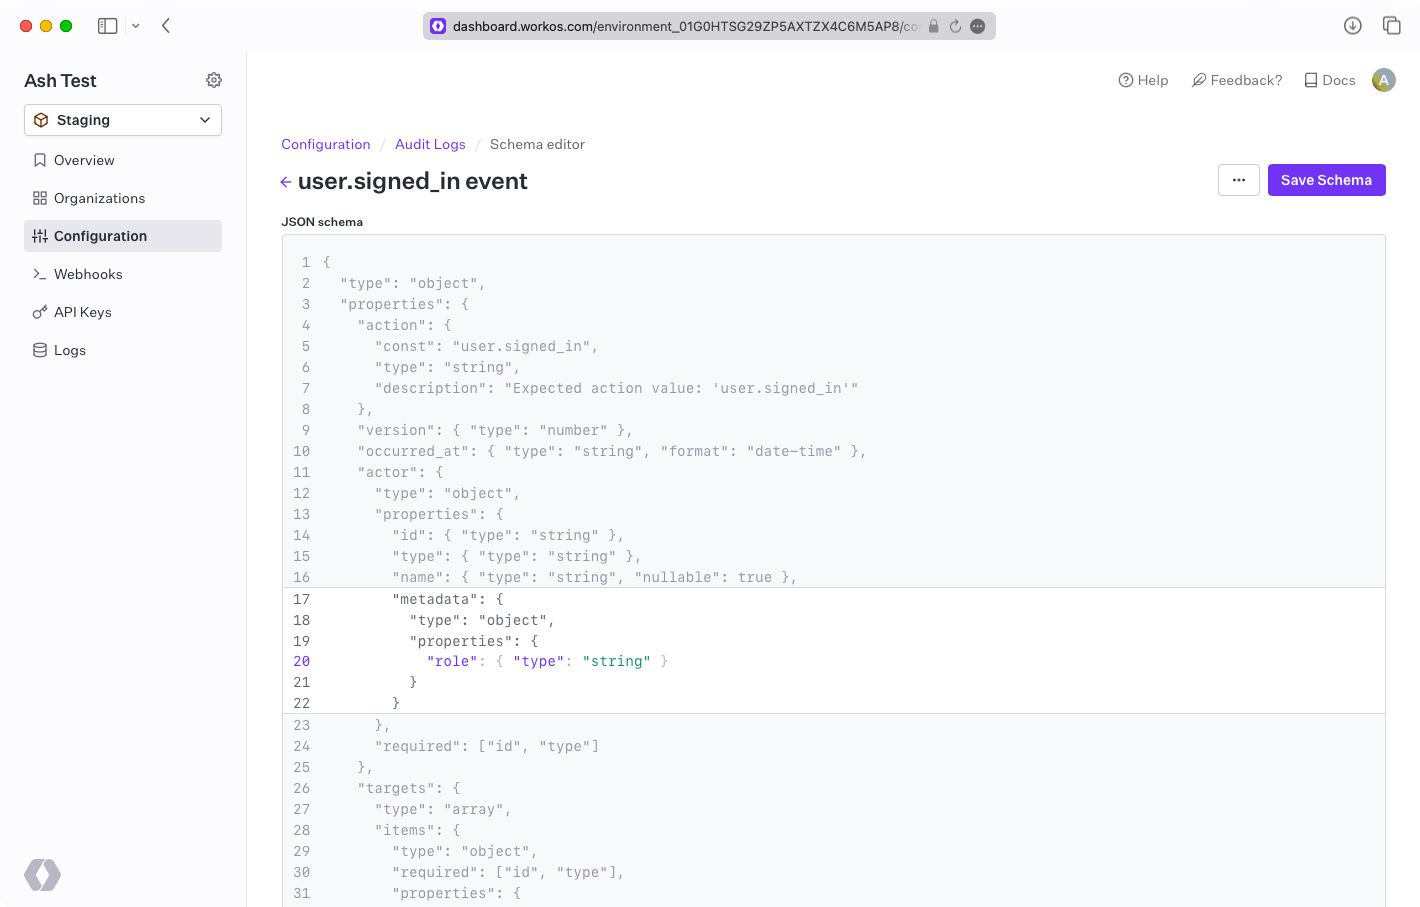 A screenshot showing the schema editor in the WorkOS Dashboard.